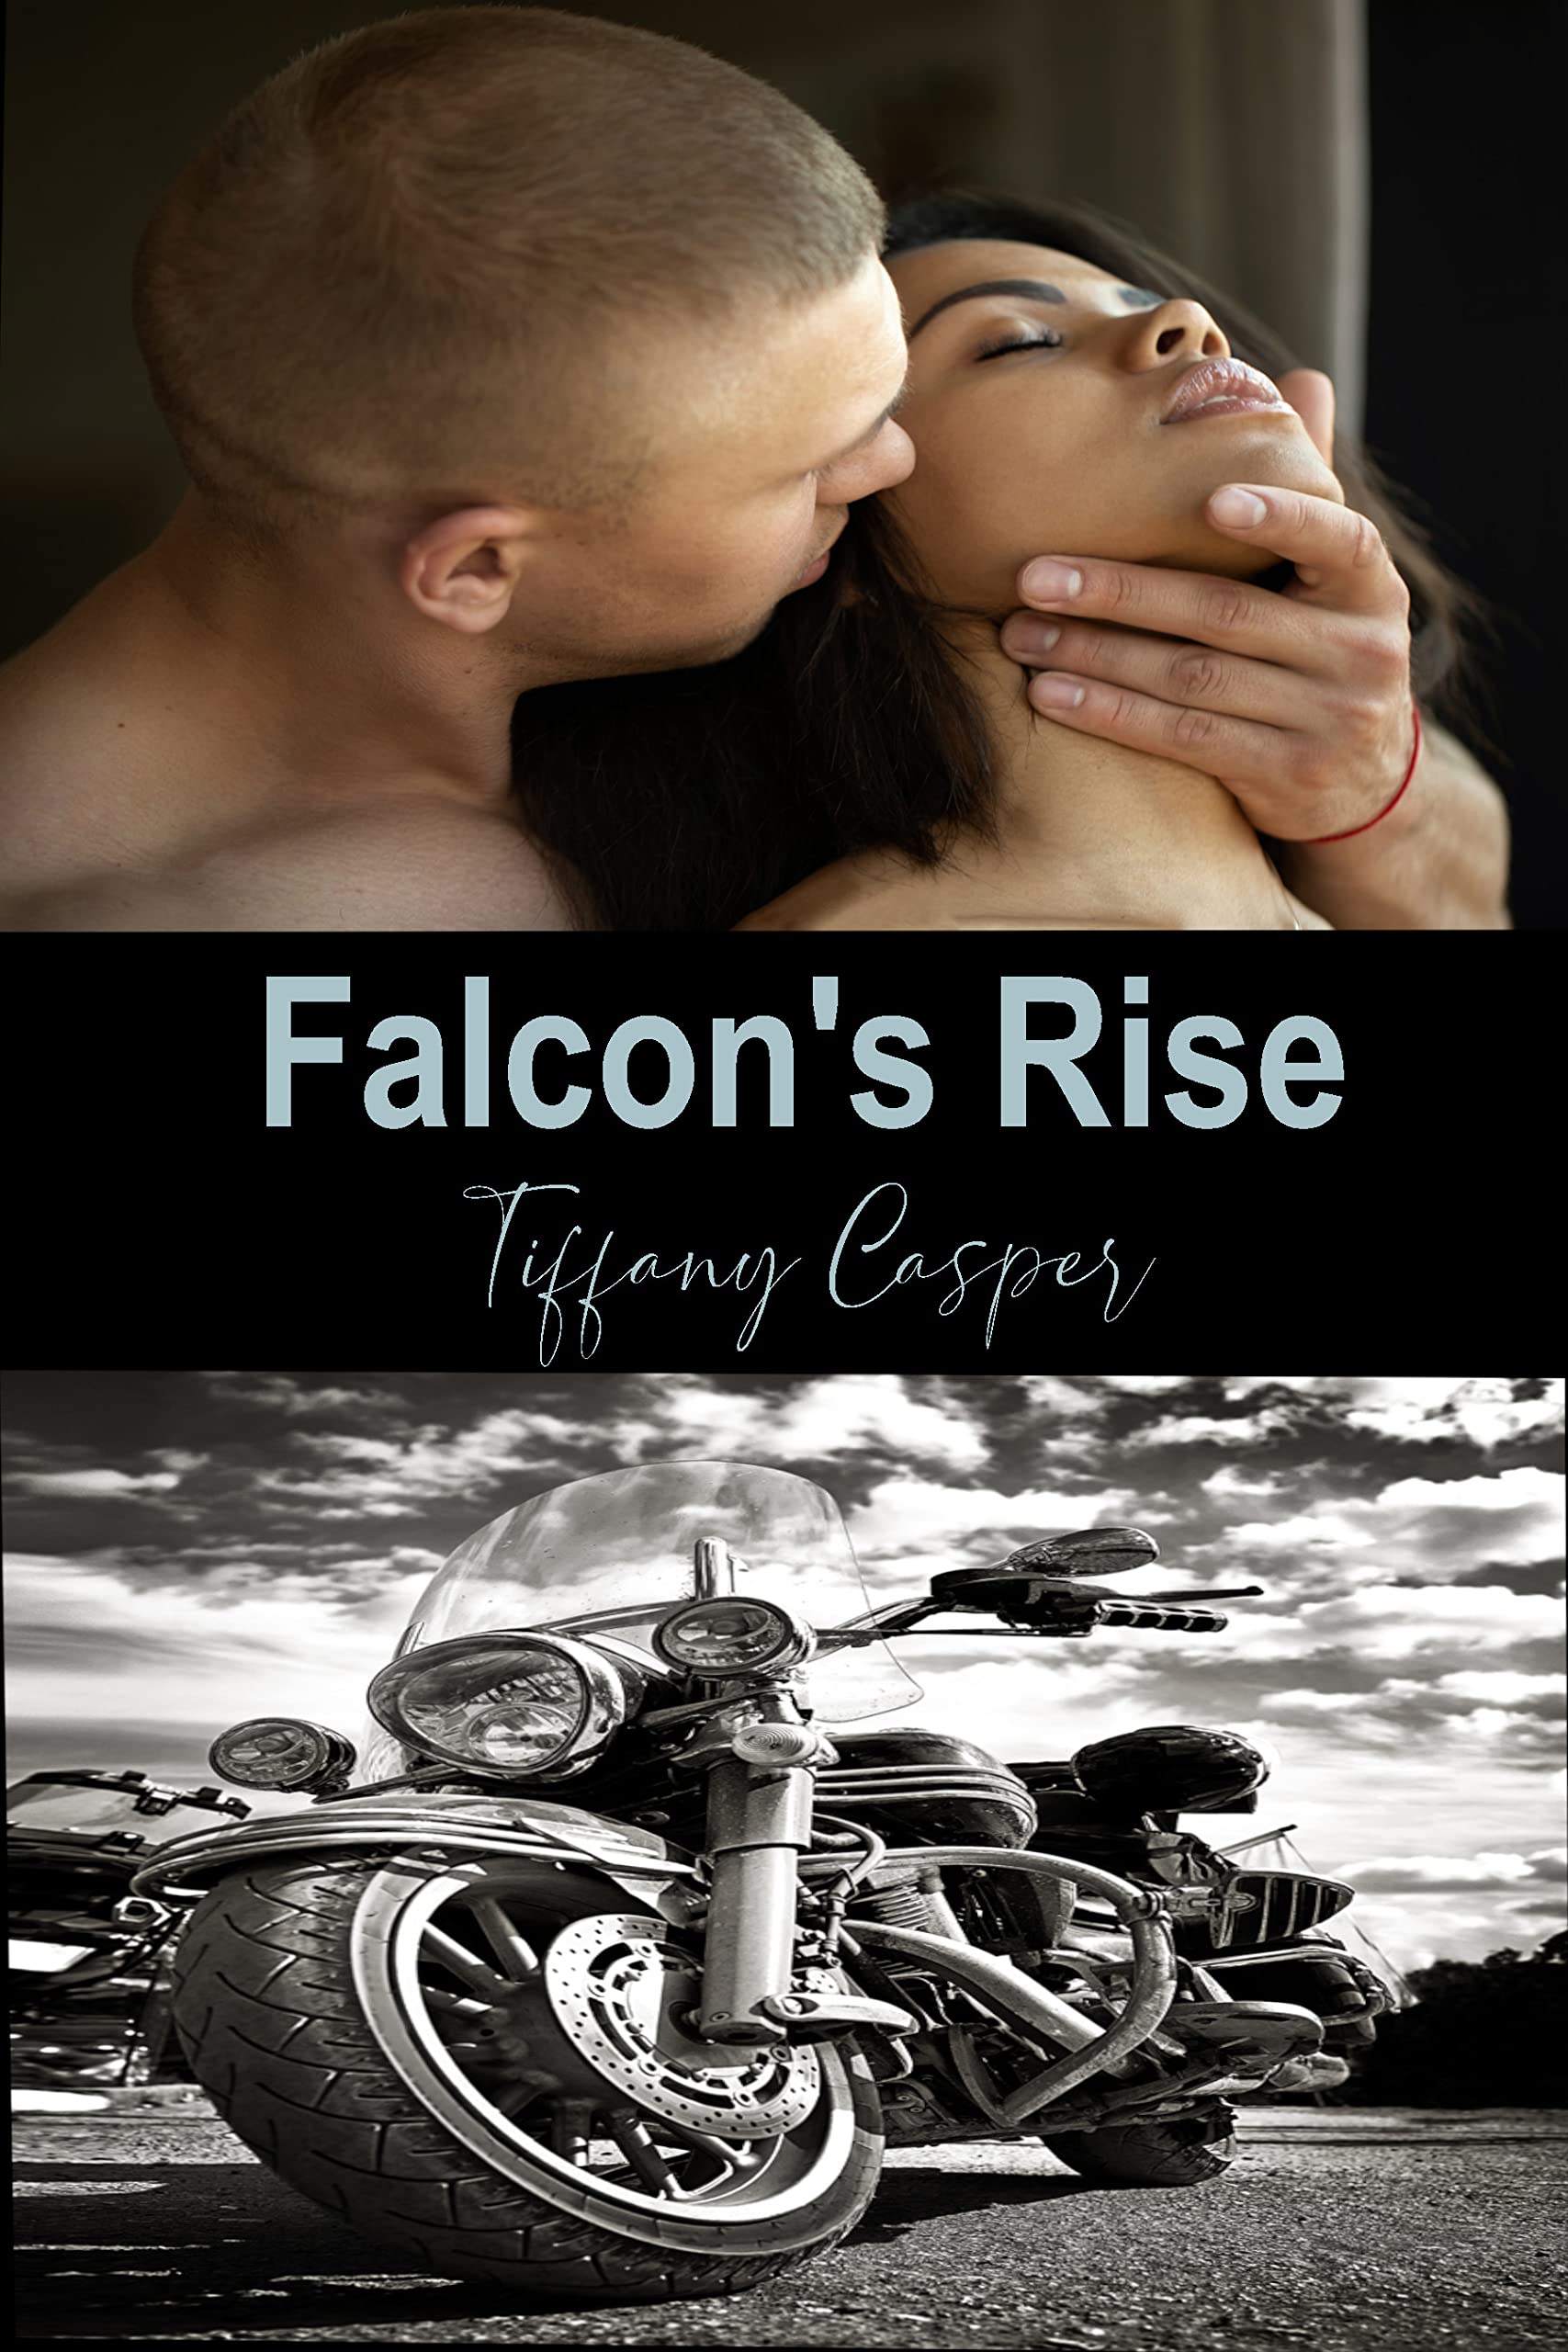 Rise by Tiffany Casper PDF Download